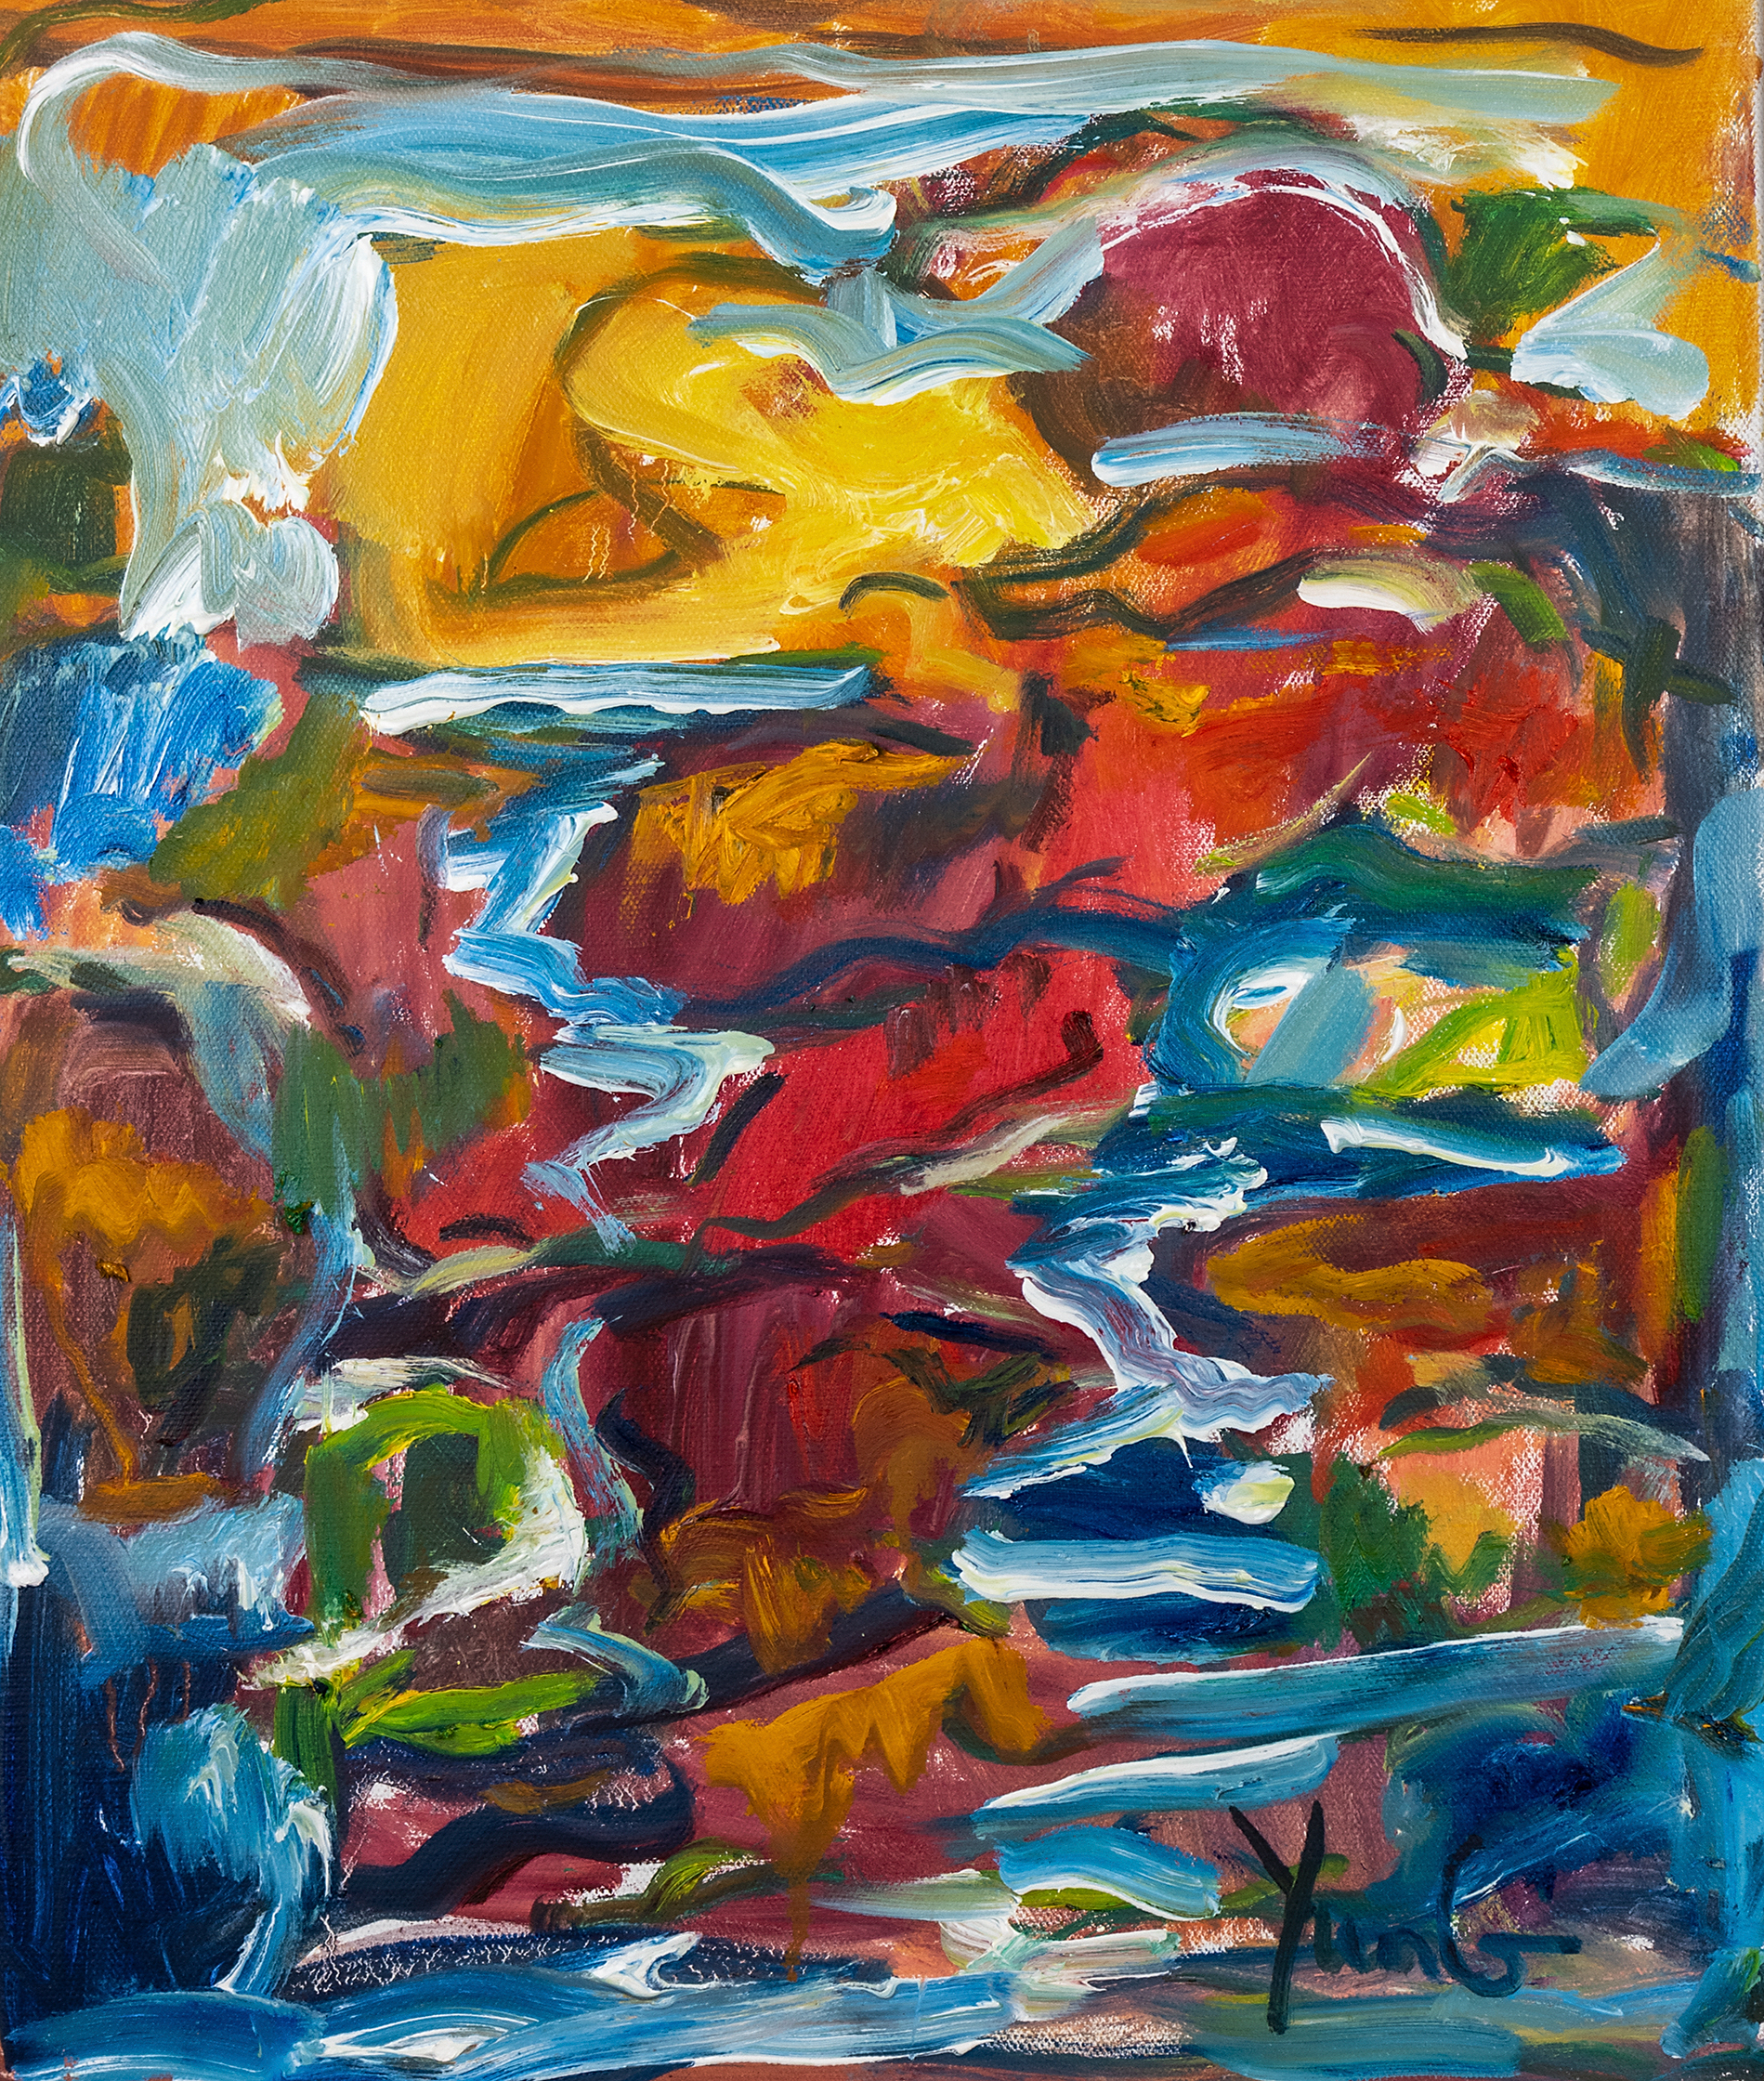 Dorothy Yung - YANGTZE RIVER - Oil on canvas - 2021